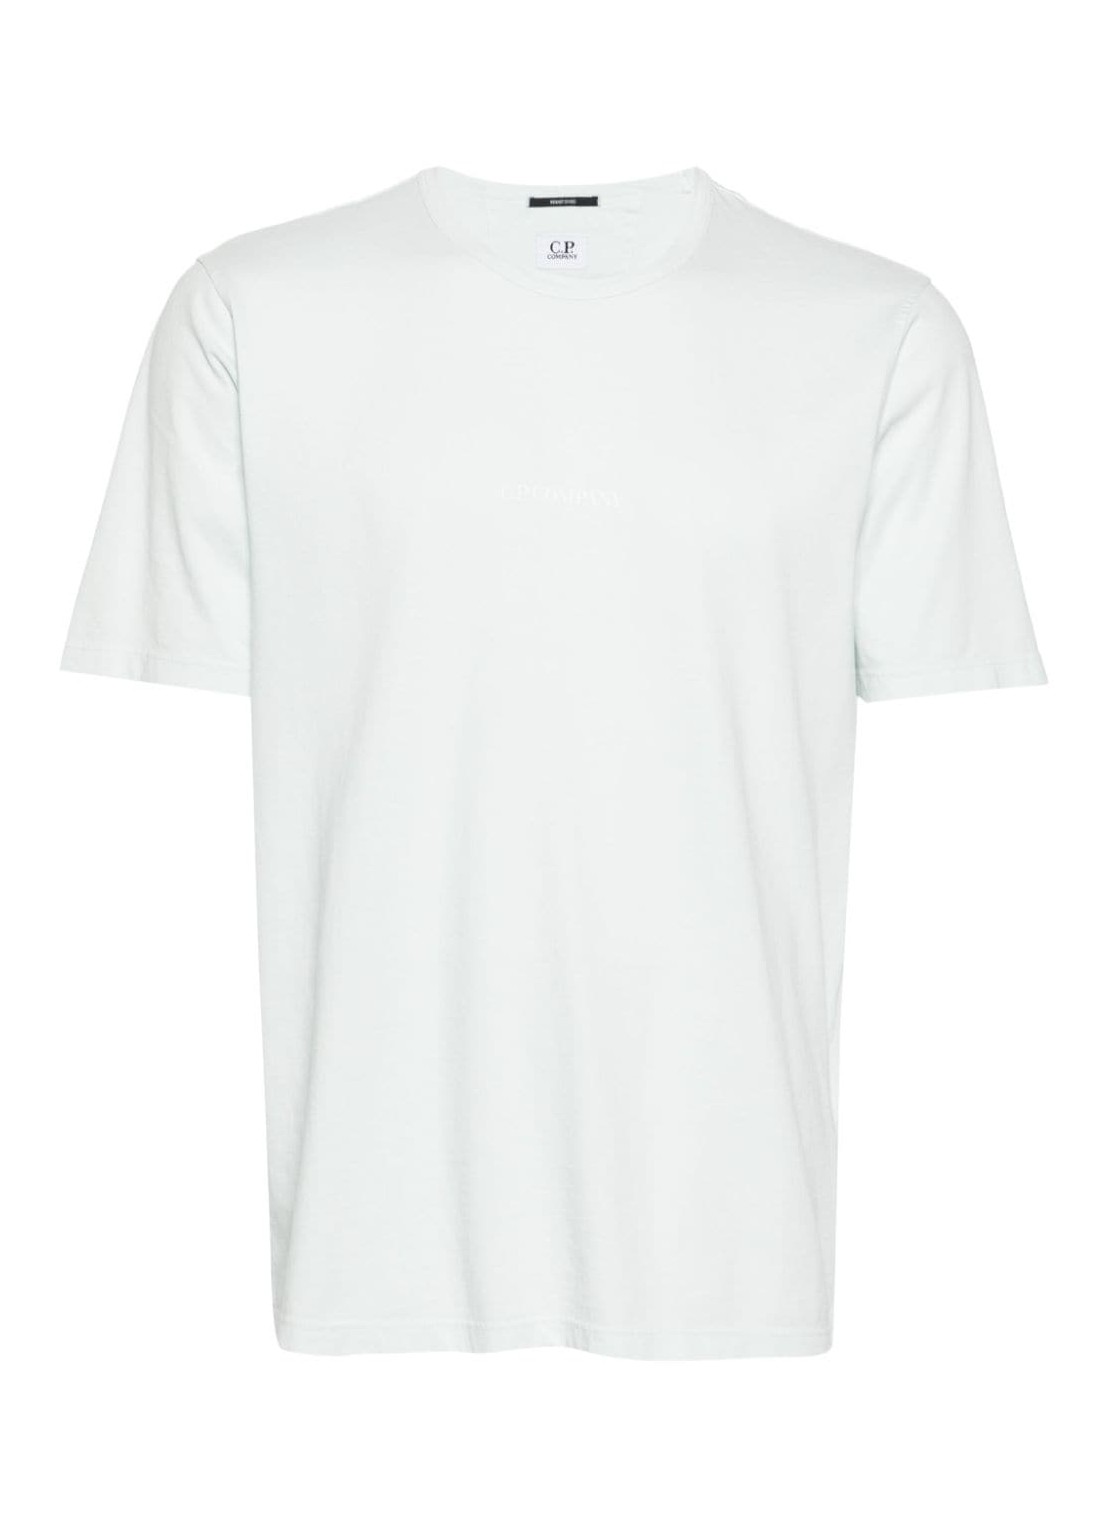 Camiseta c.p.company t-shirt man 24/1 jersey resist dyed logo t-shirt 16cmts085a005431r 806 talla S
